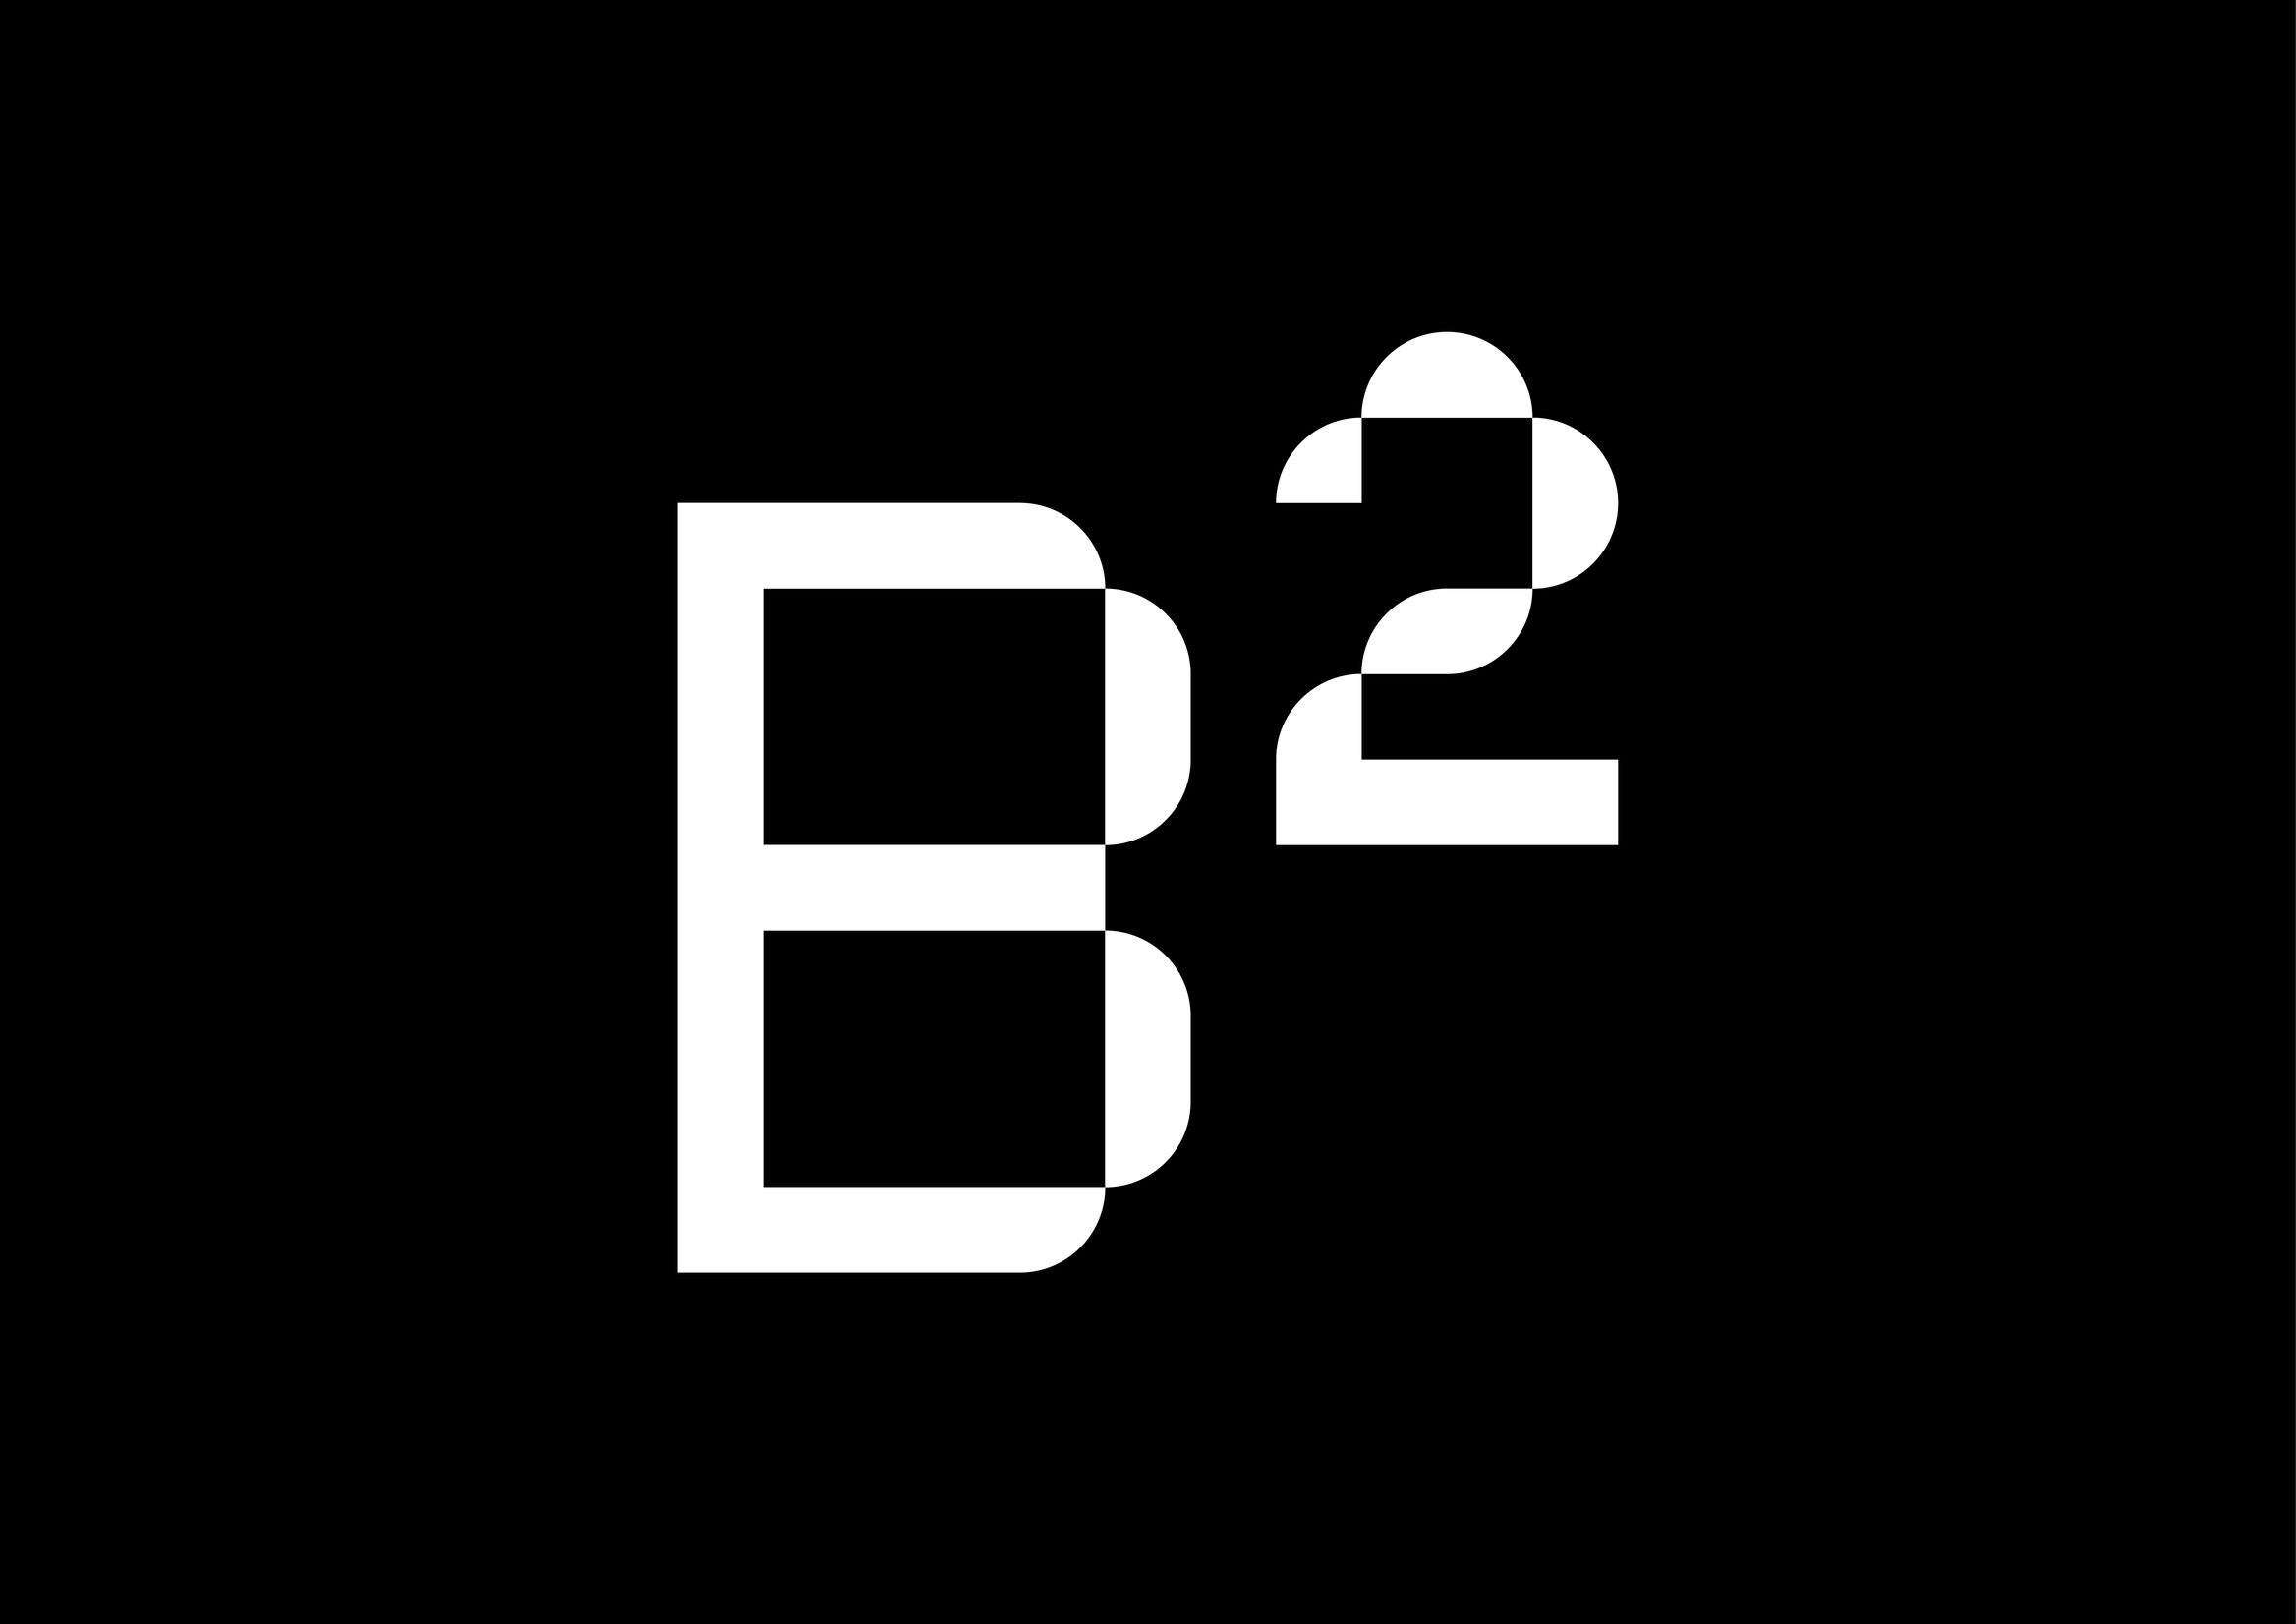 mejores-logos-2020-2021-b2tokyo-08